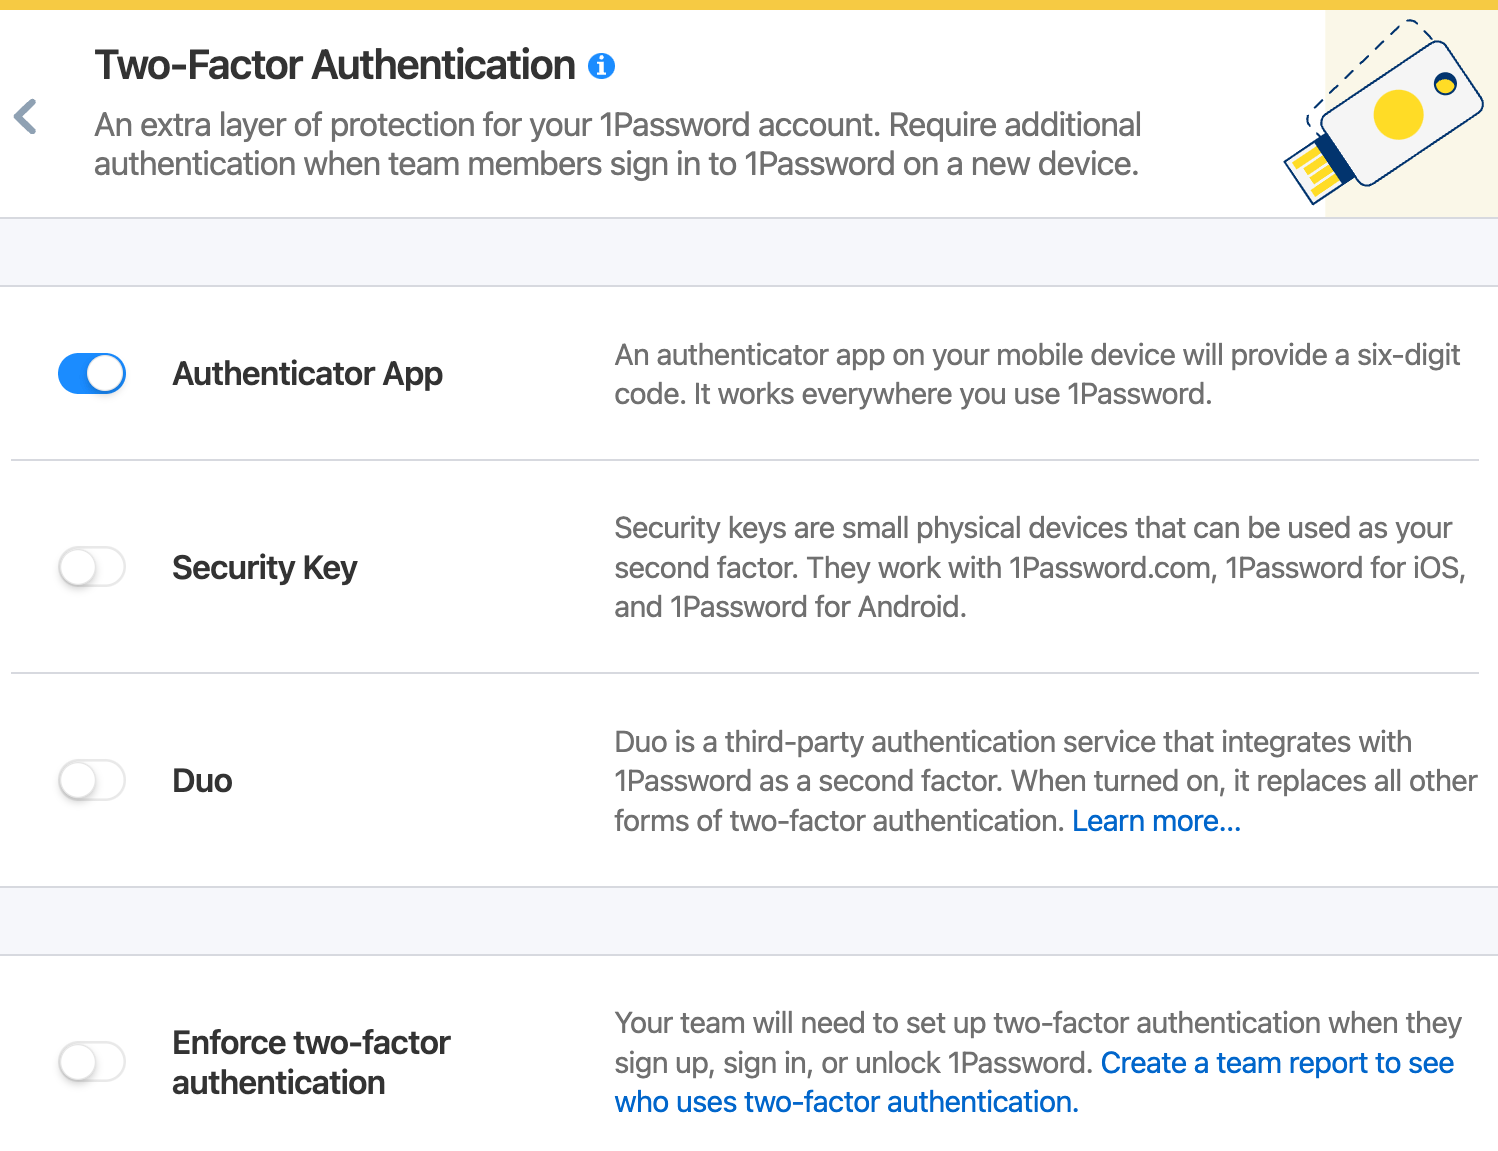 Microsoft authenticator app code not working